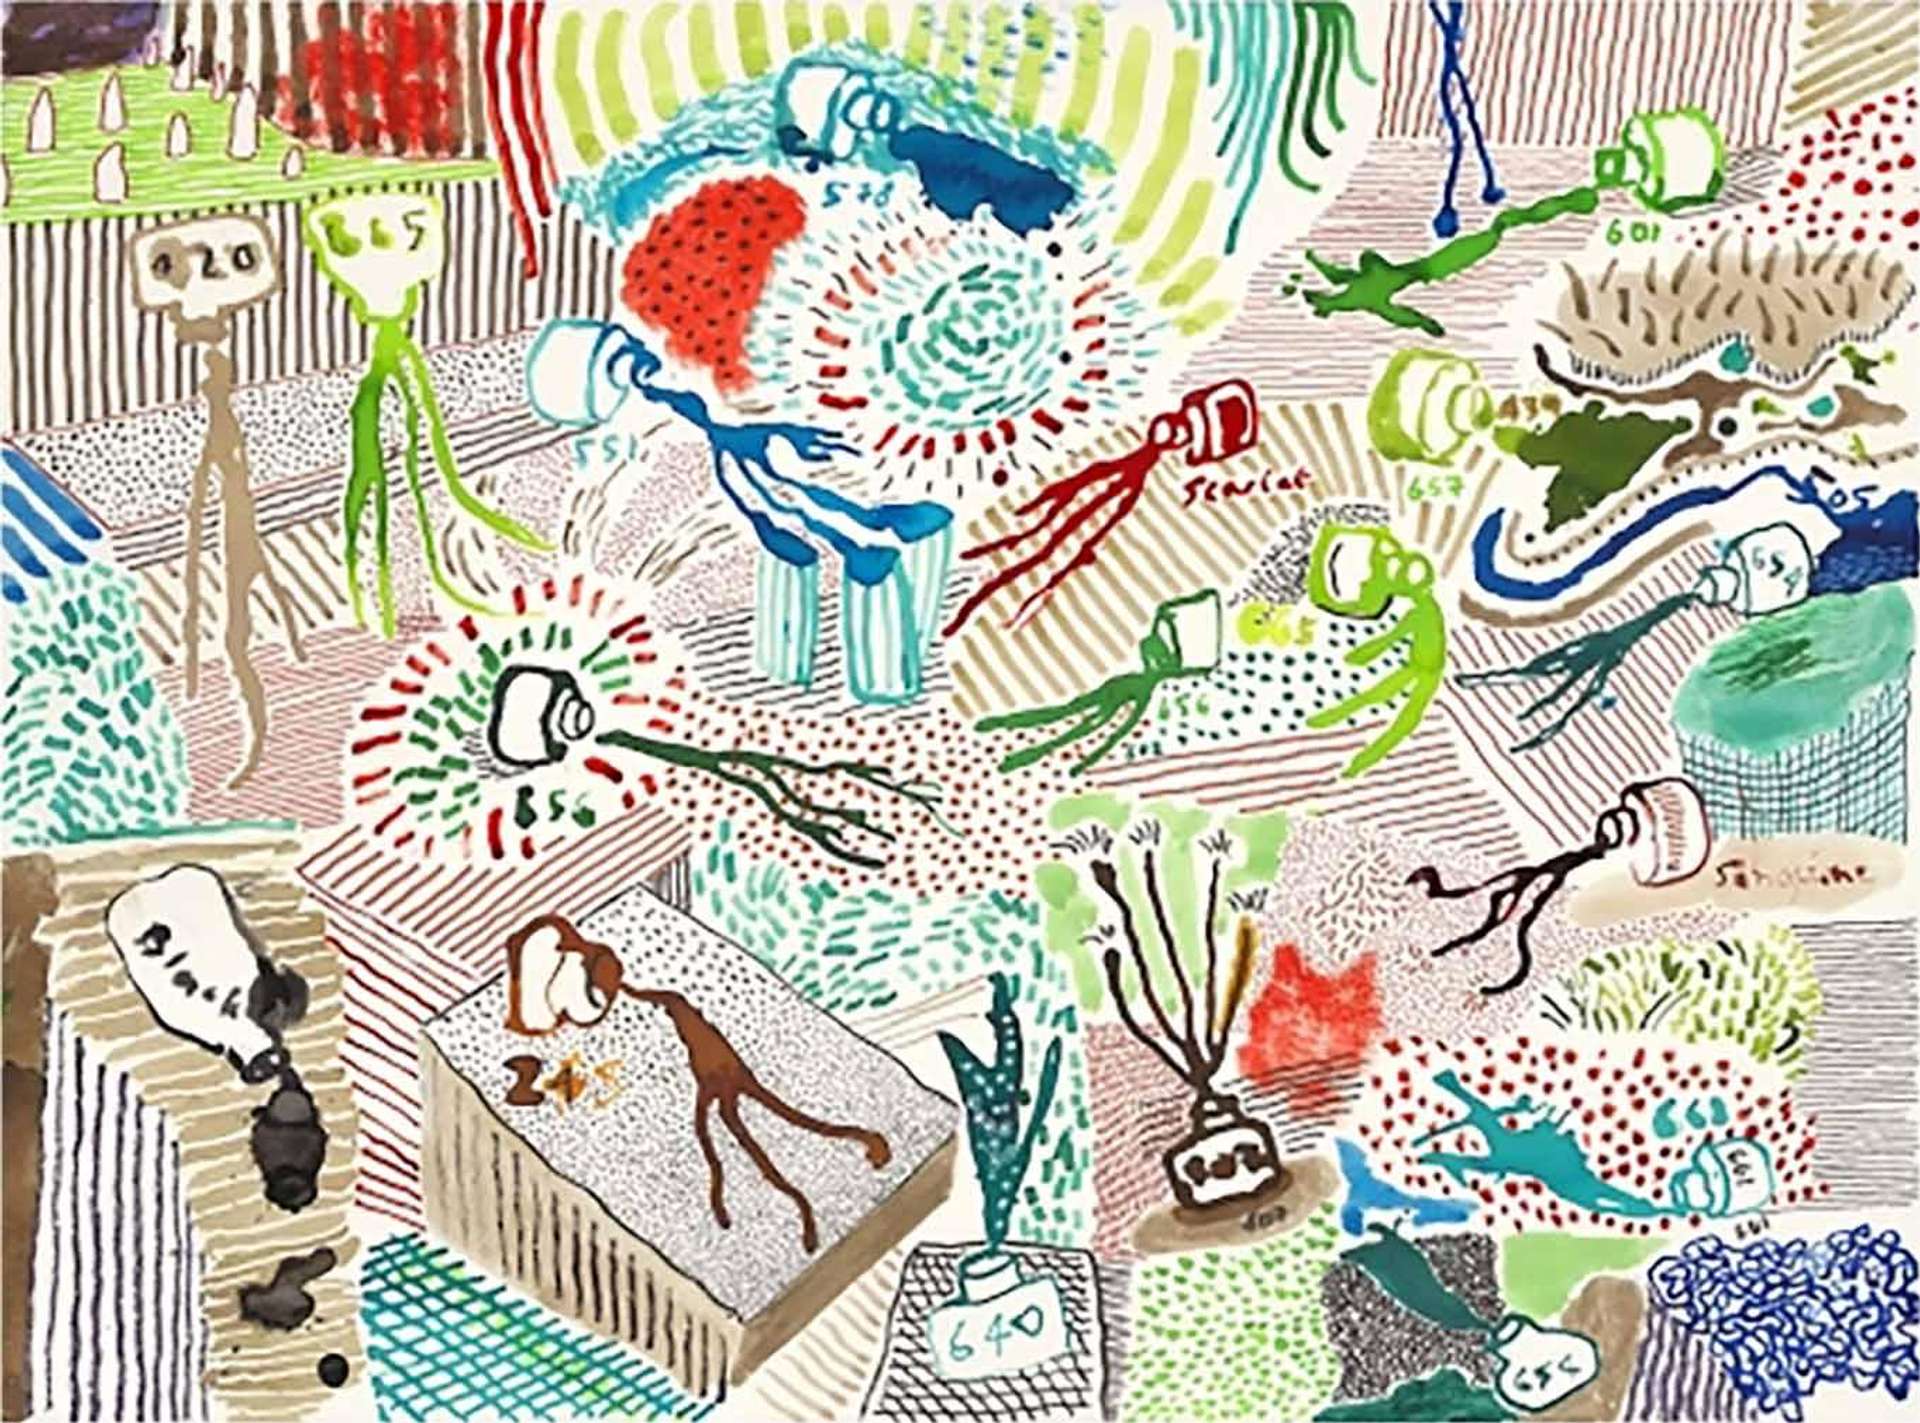 Spilt Ink - Signed Print by David Hockney 2019 - MyArtBroker